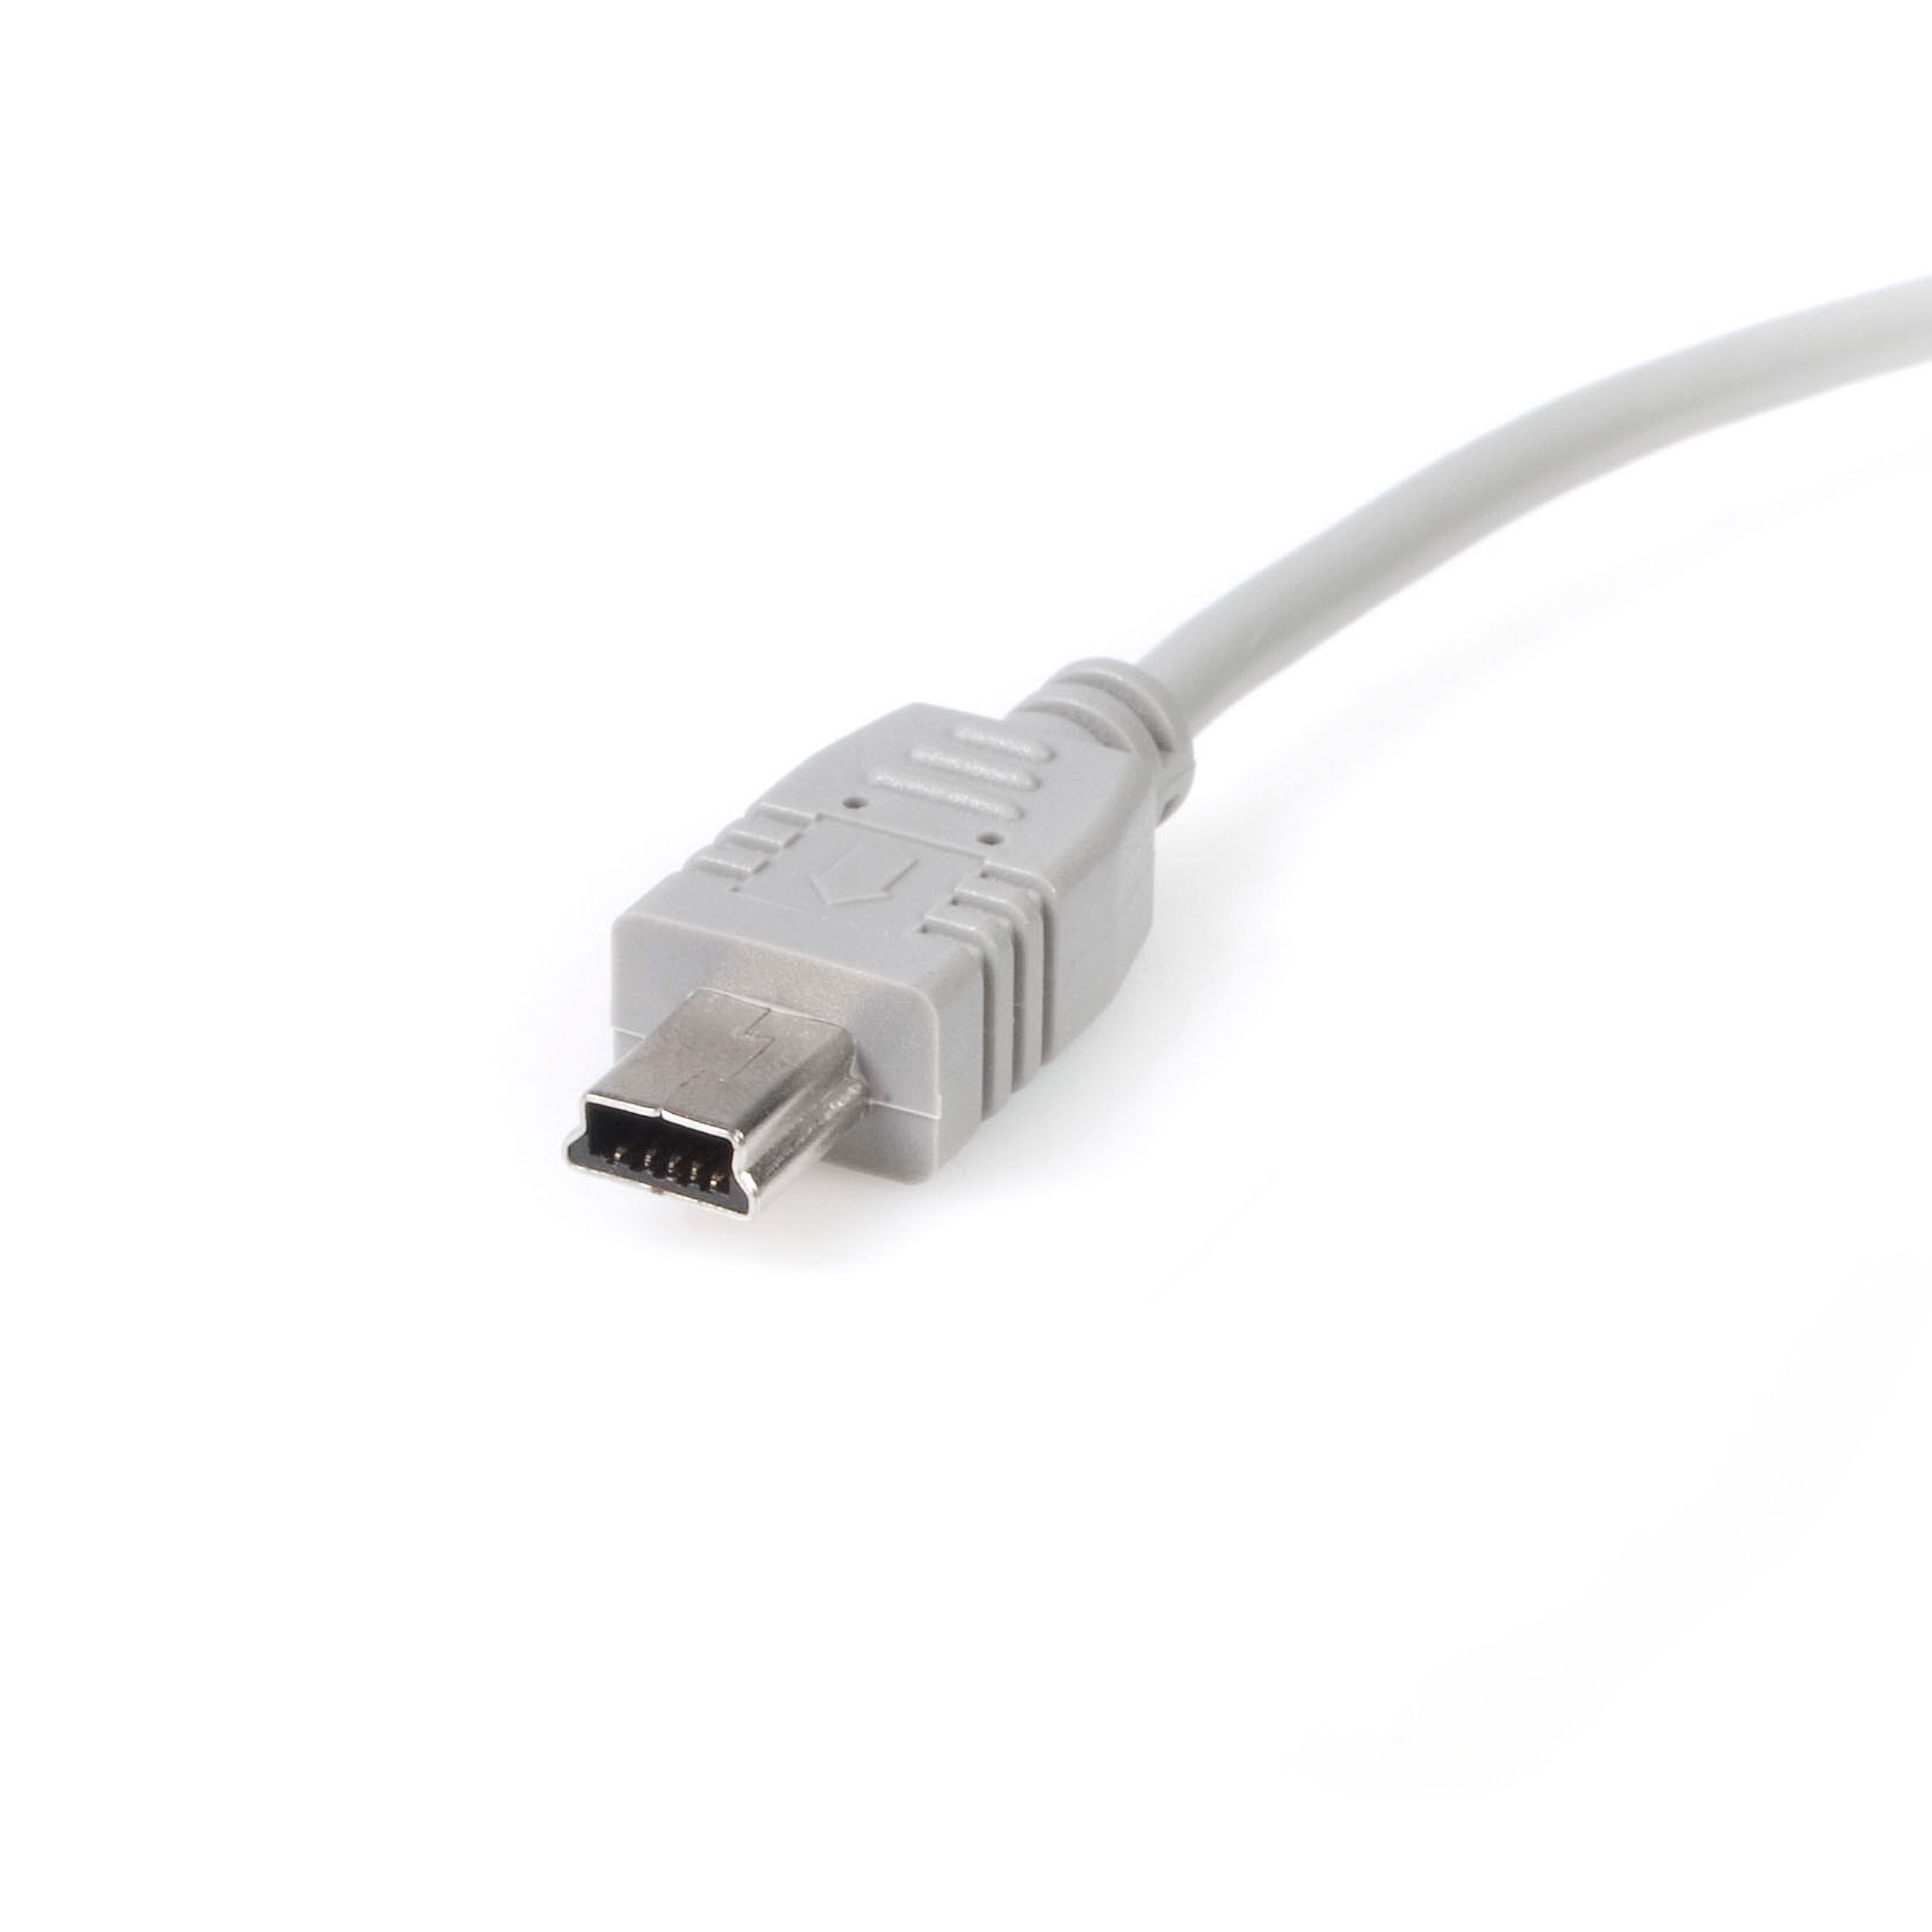 StarTech.com 10 ft. (3 m) USB to Mini USB Cable - USB 2.0 A to Mini B - Grey - Mini USB Cable (USB2HABM10) Gray